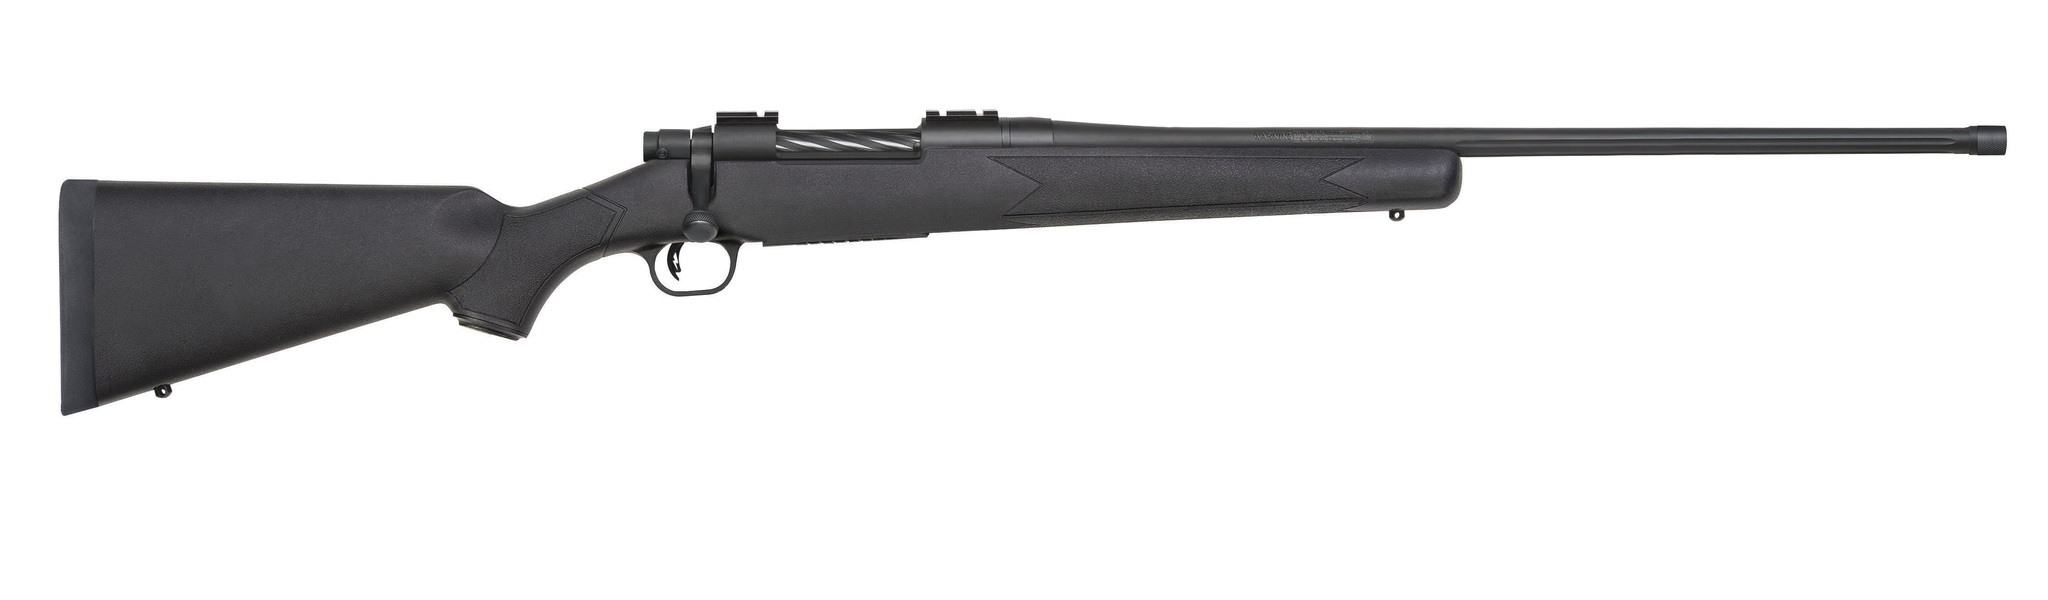 Mossberg Patriot Rifle 300 Win Mag